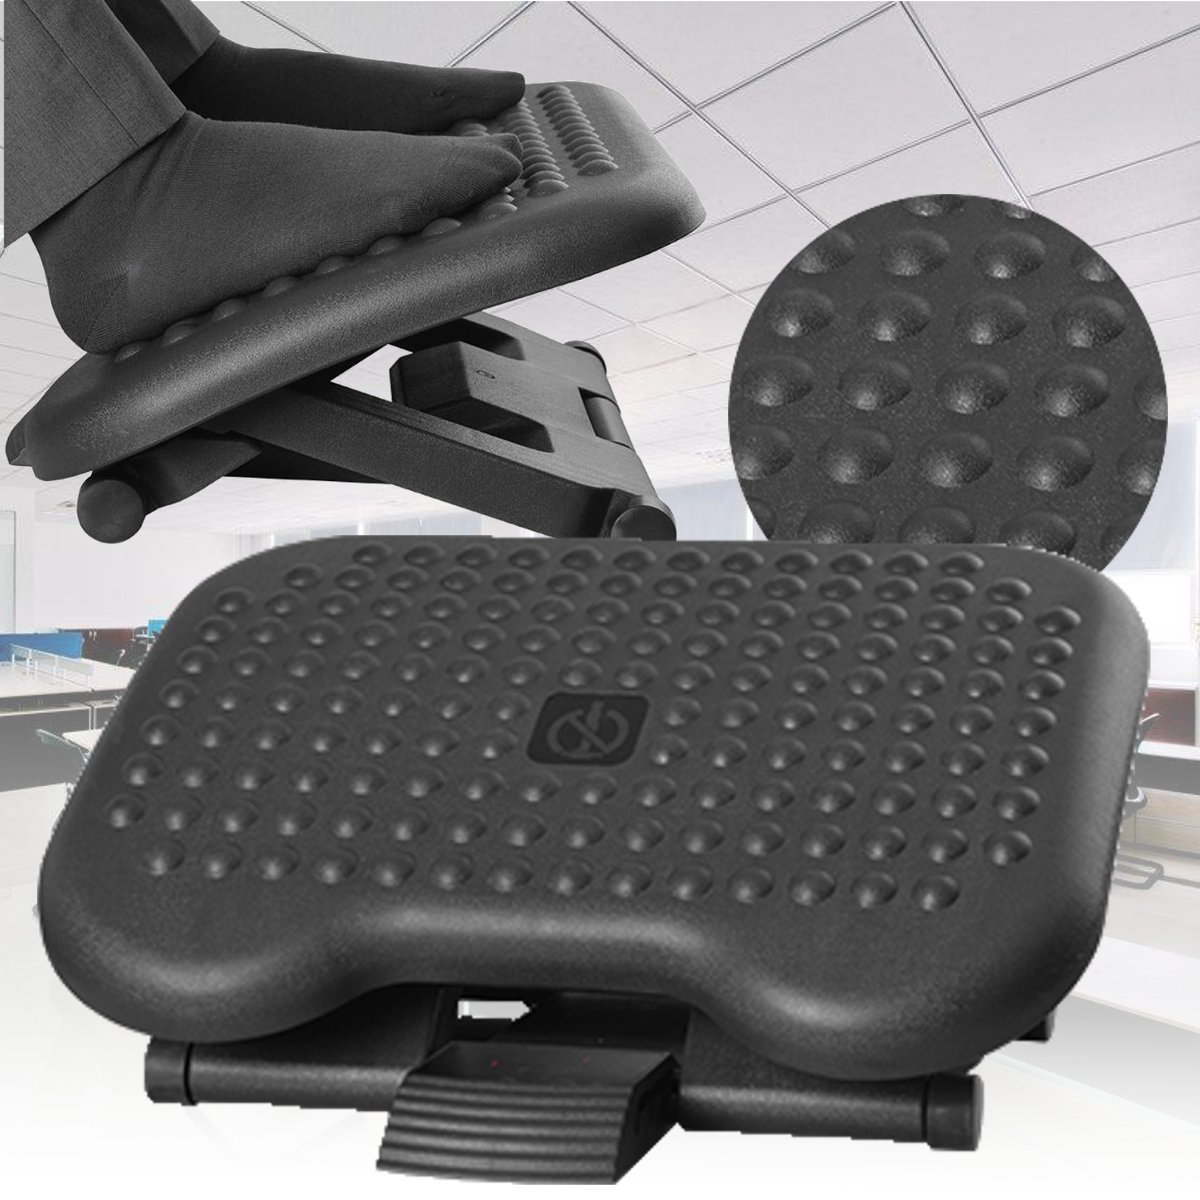 Adjustable Tilting Footrest Under Desk Ergonomic Office Foot Rest Pad Footstool Foot Pegs 4